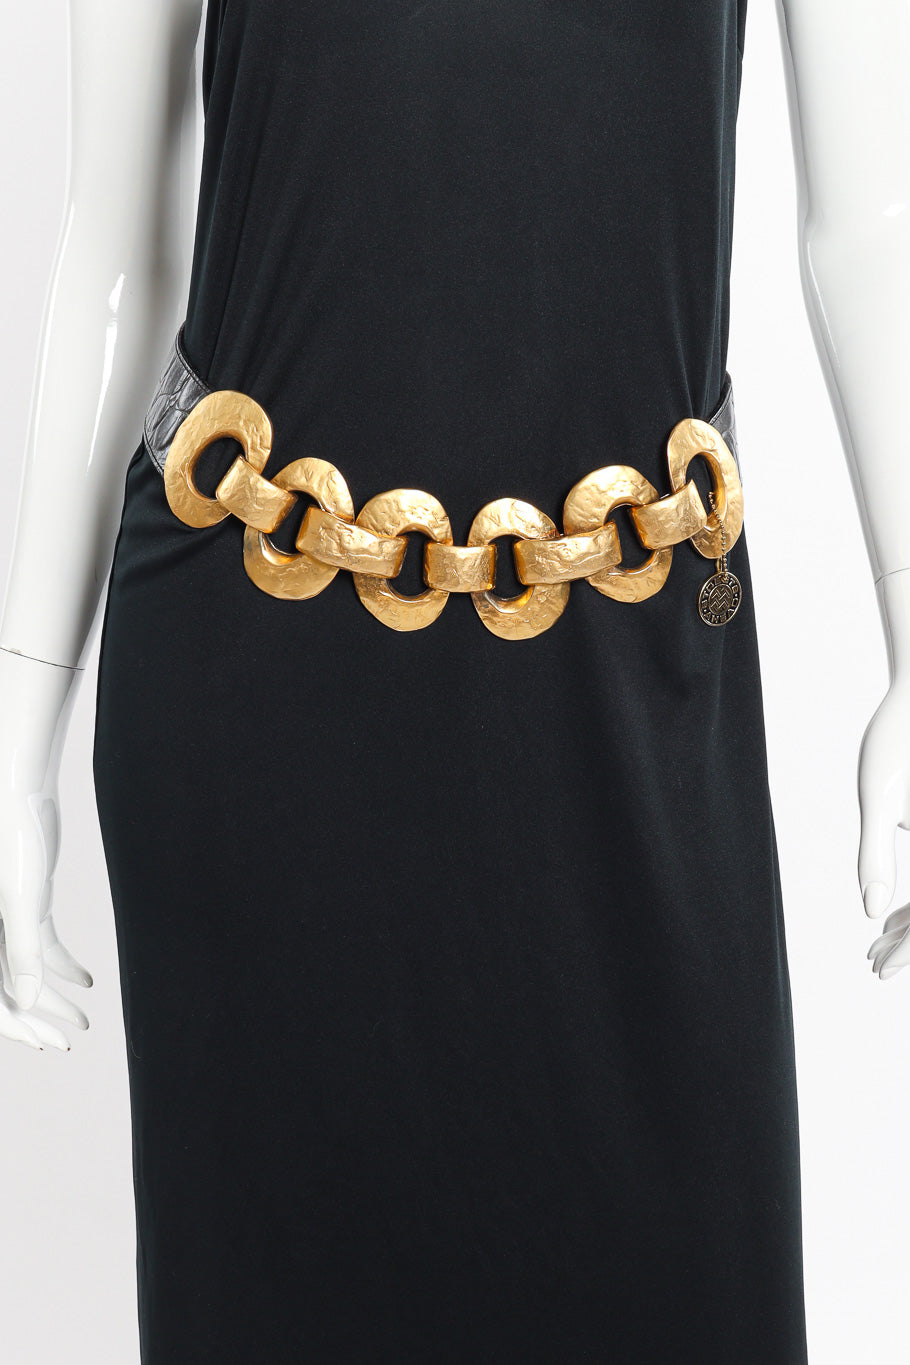 Hammered Ring Link Belt by Streets Ahead on mannequin in black dress @recessla